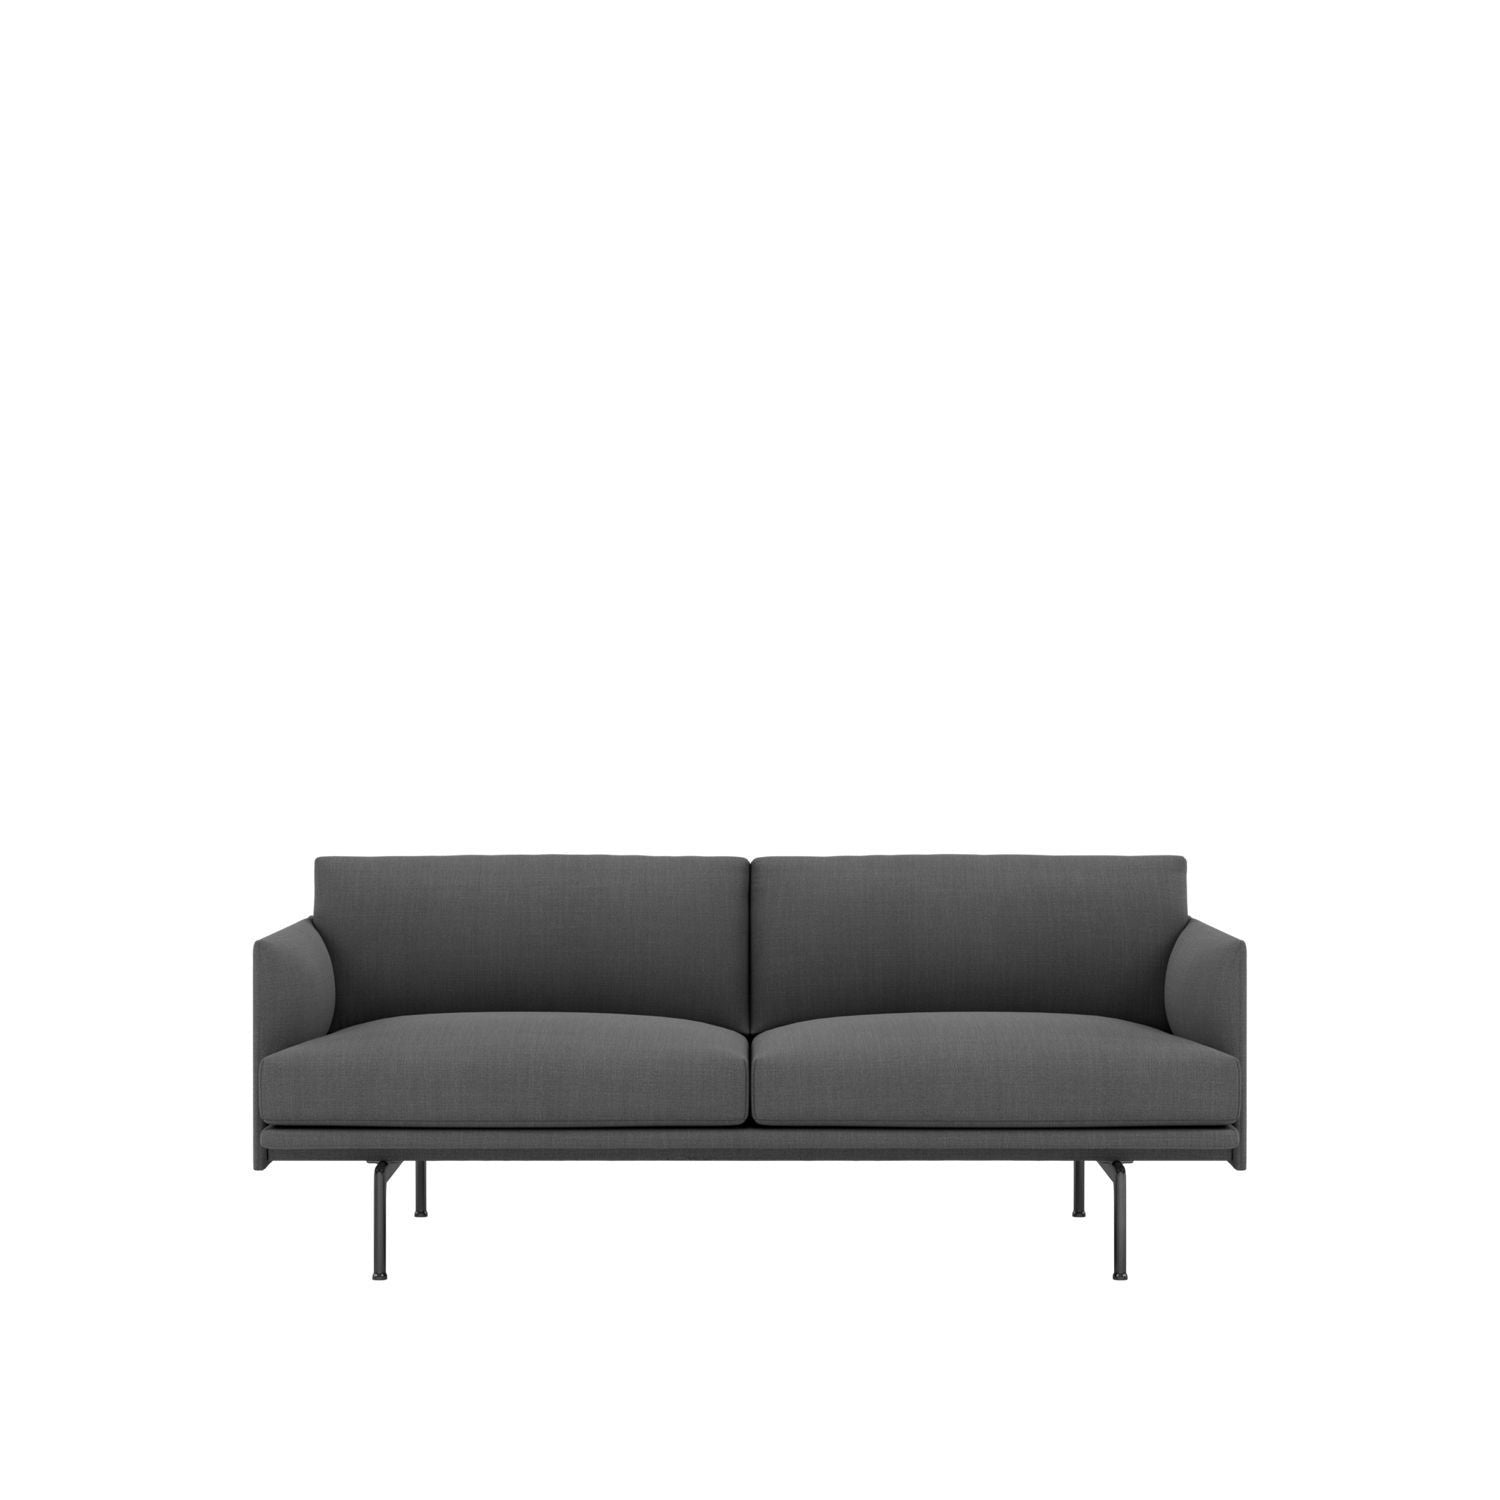 Muuto disposisjon sofa 2 seters, stoff, remix 163